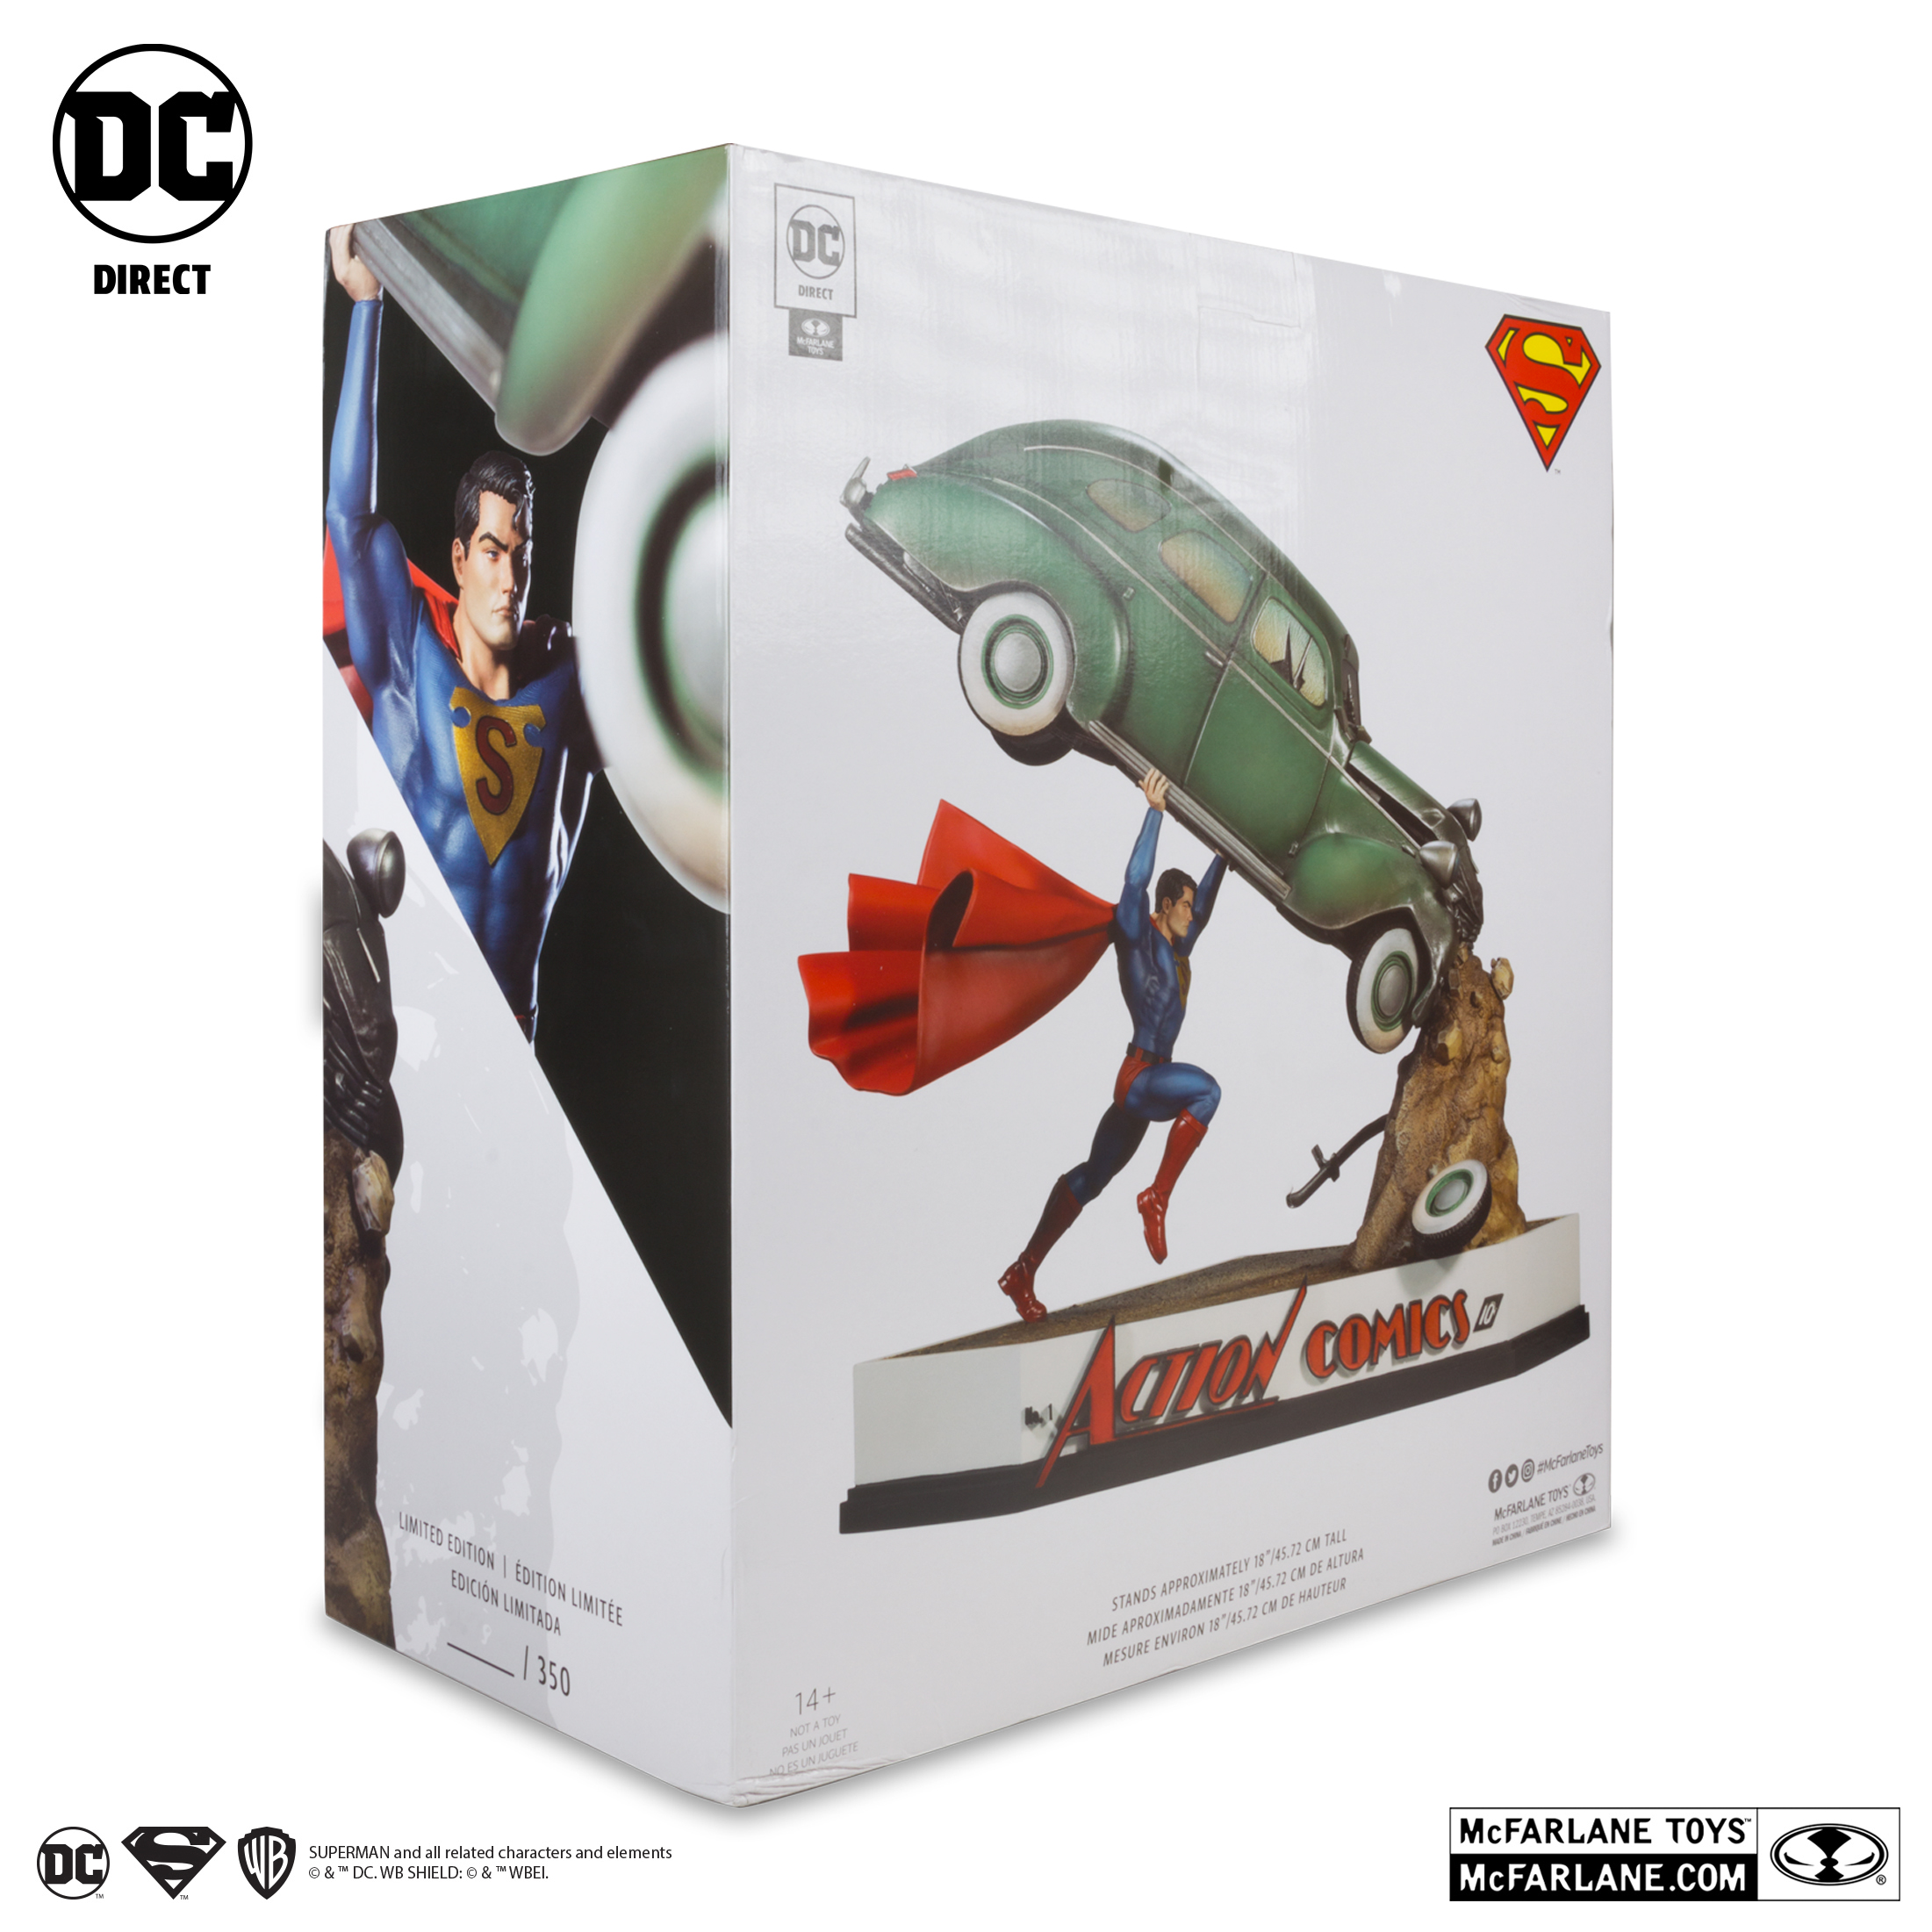 DC Collector figurine Superman (Return of Superman) 18 cm